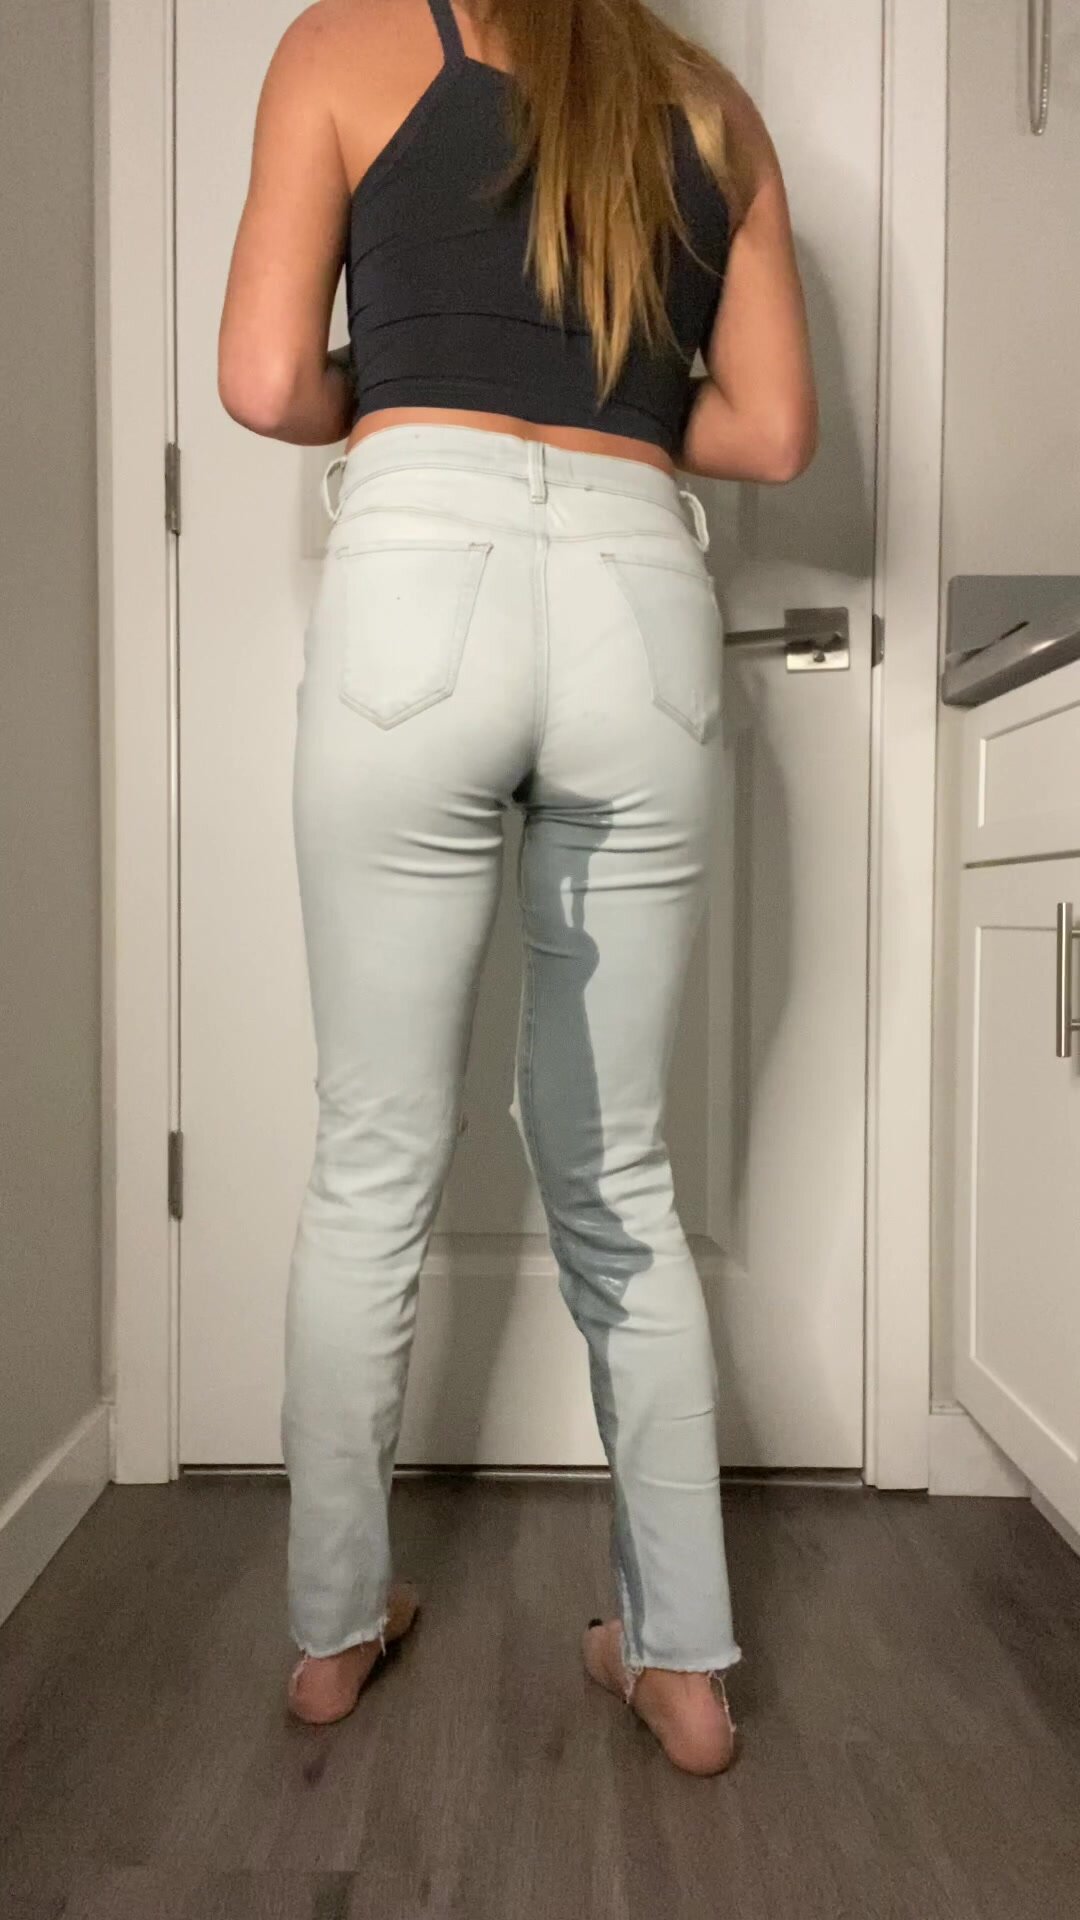 Girl Pees pants